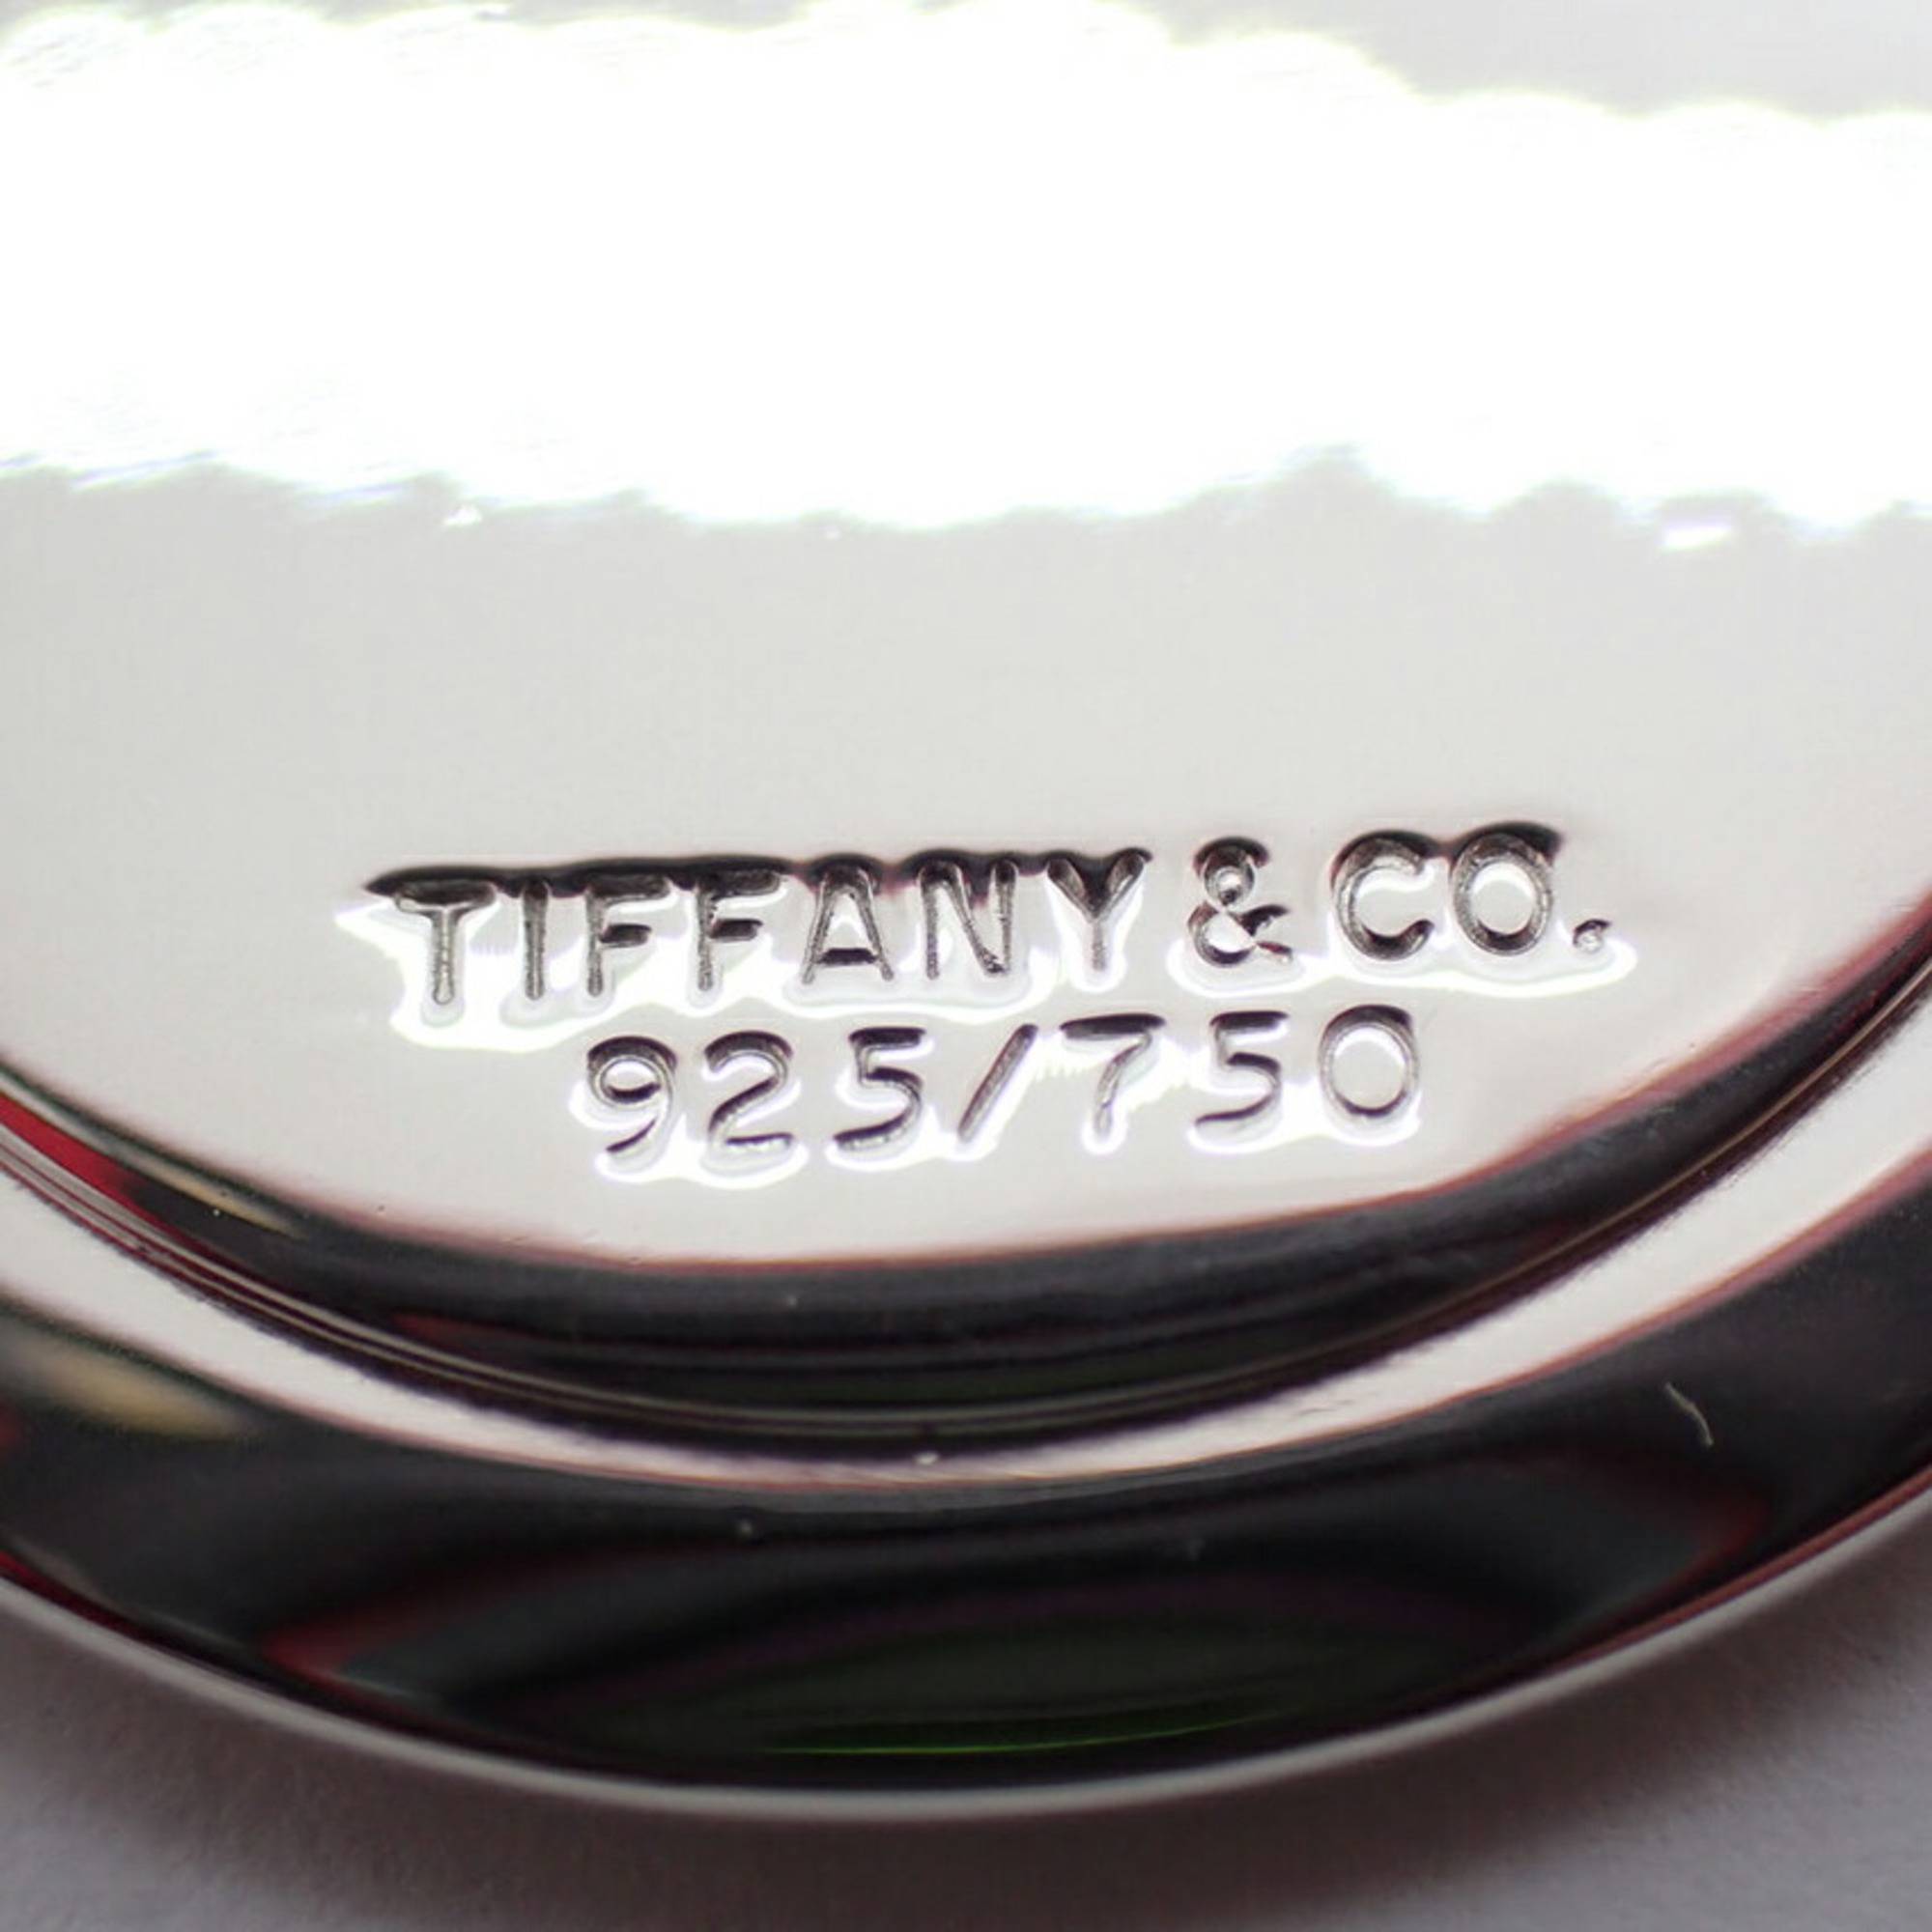 TIFFANY 925 750 combination round coin pendant top